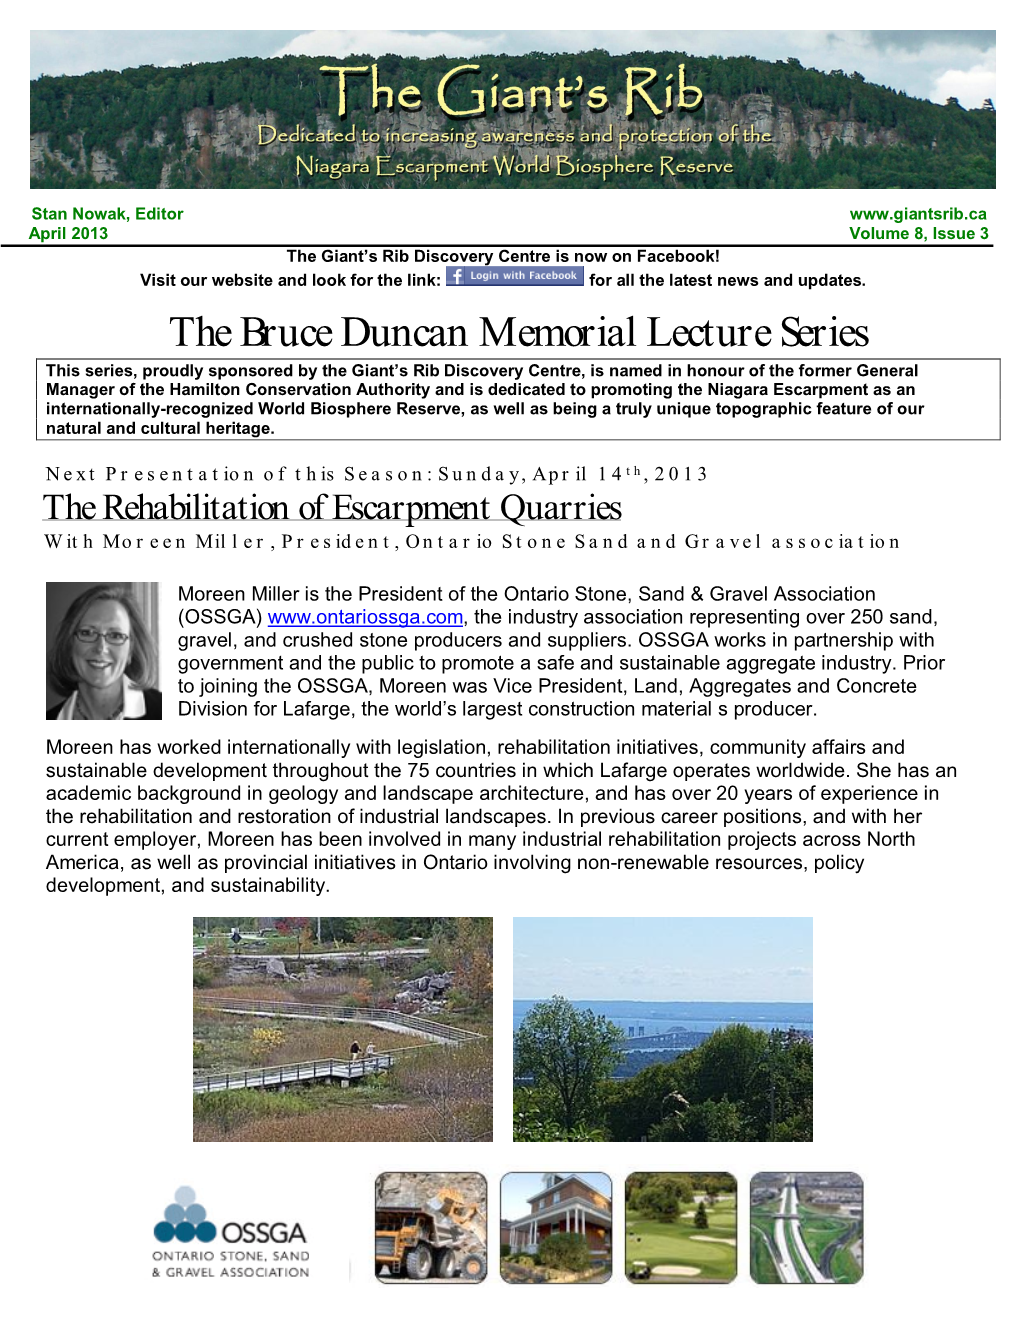 The Bruce Duncan Memorial Lecture Series